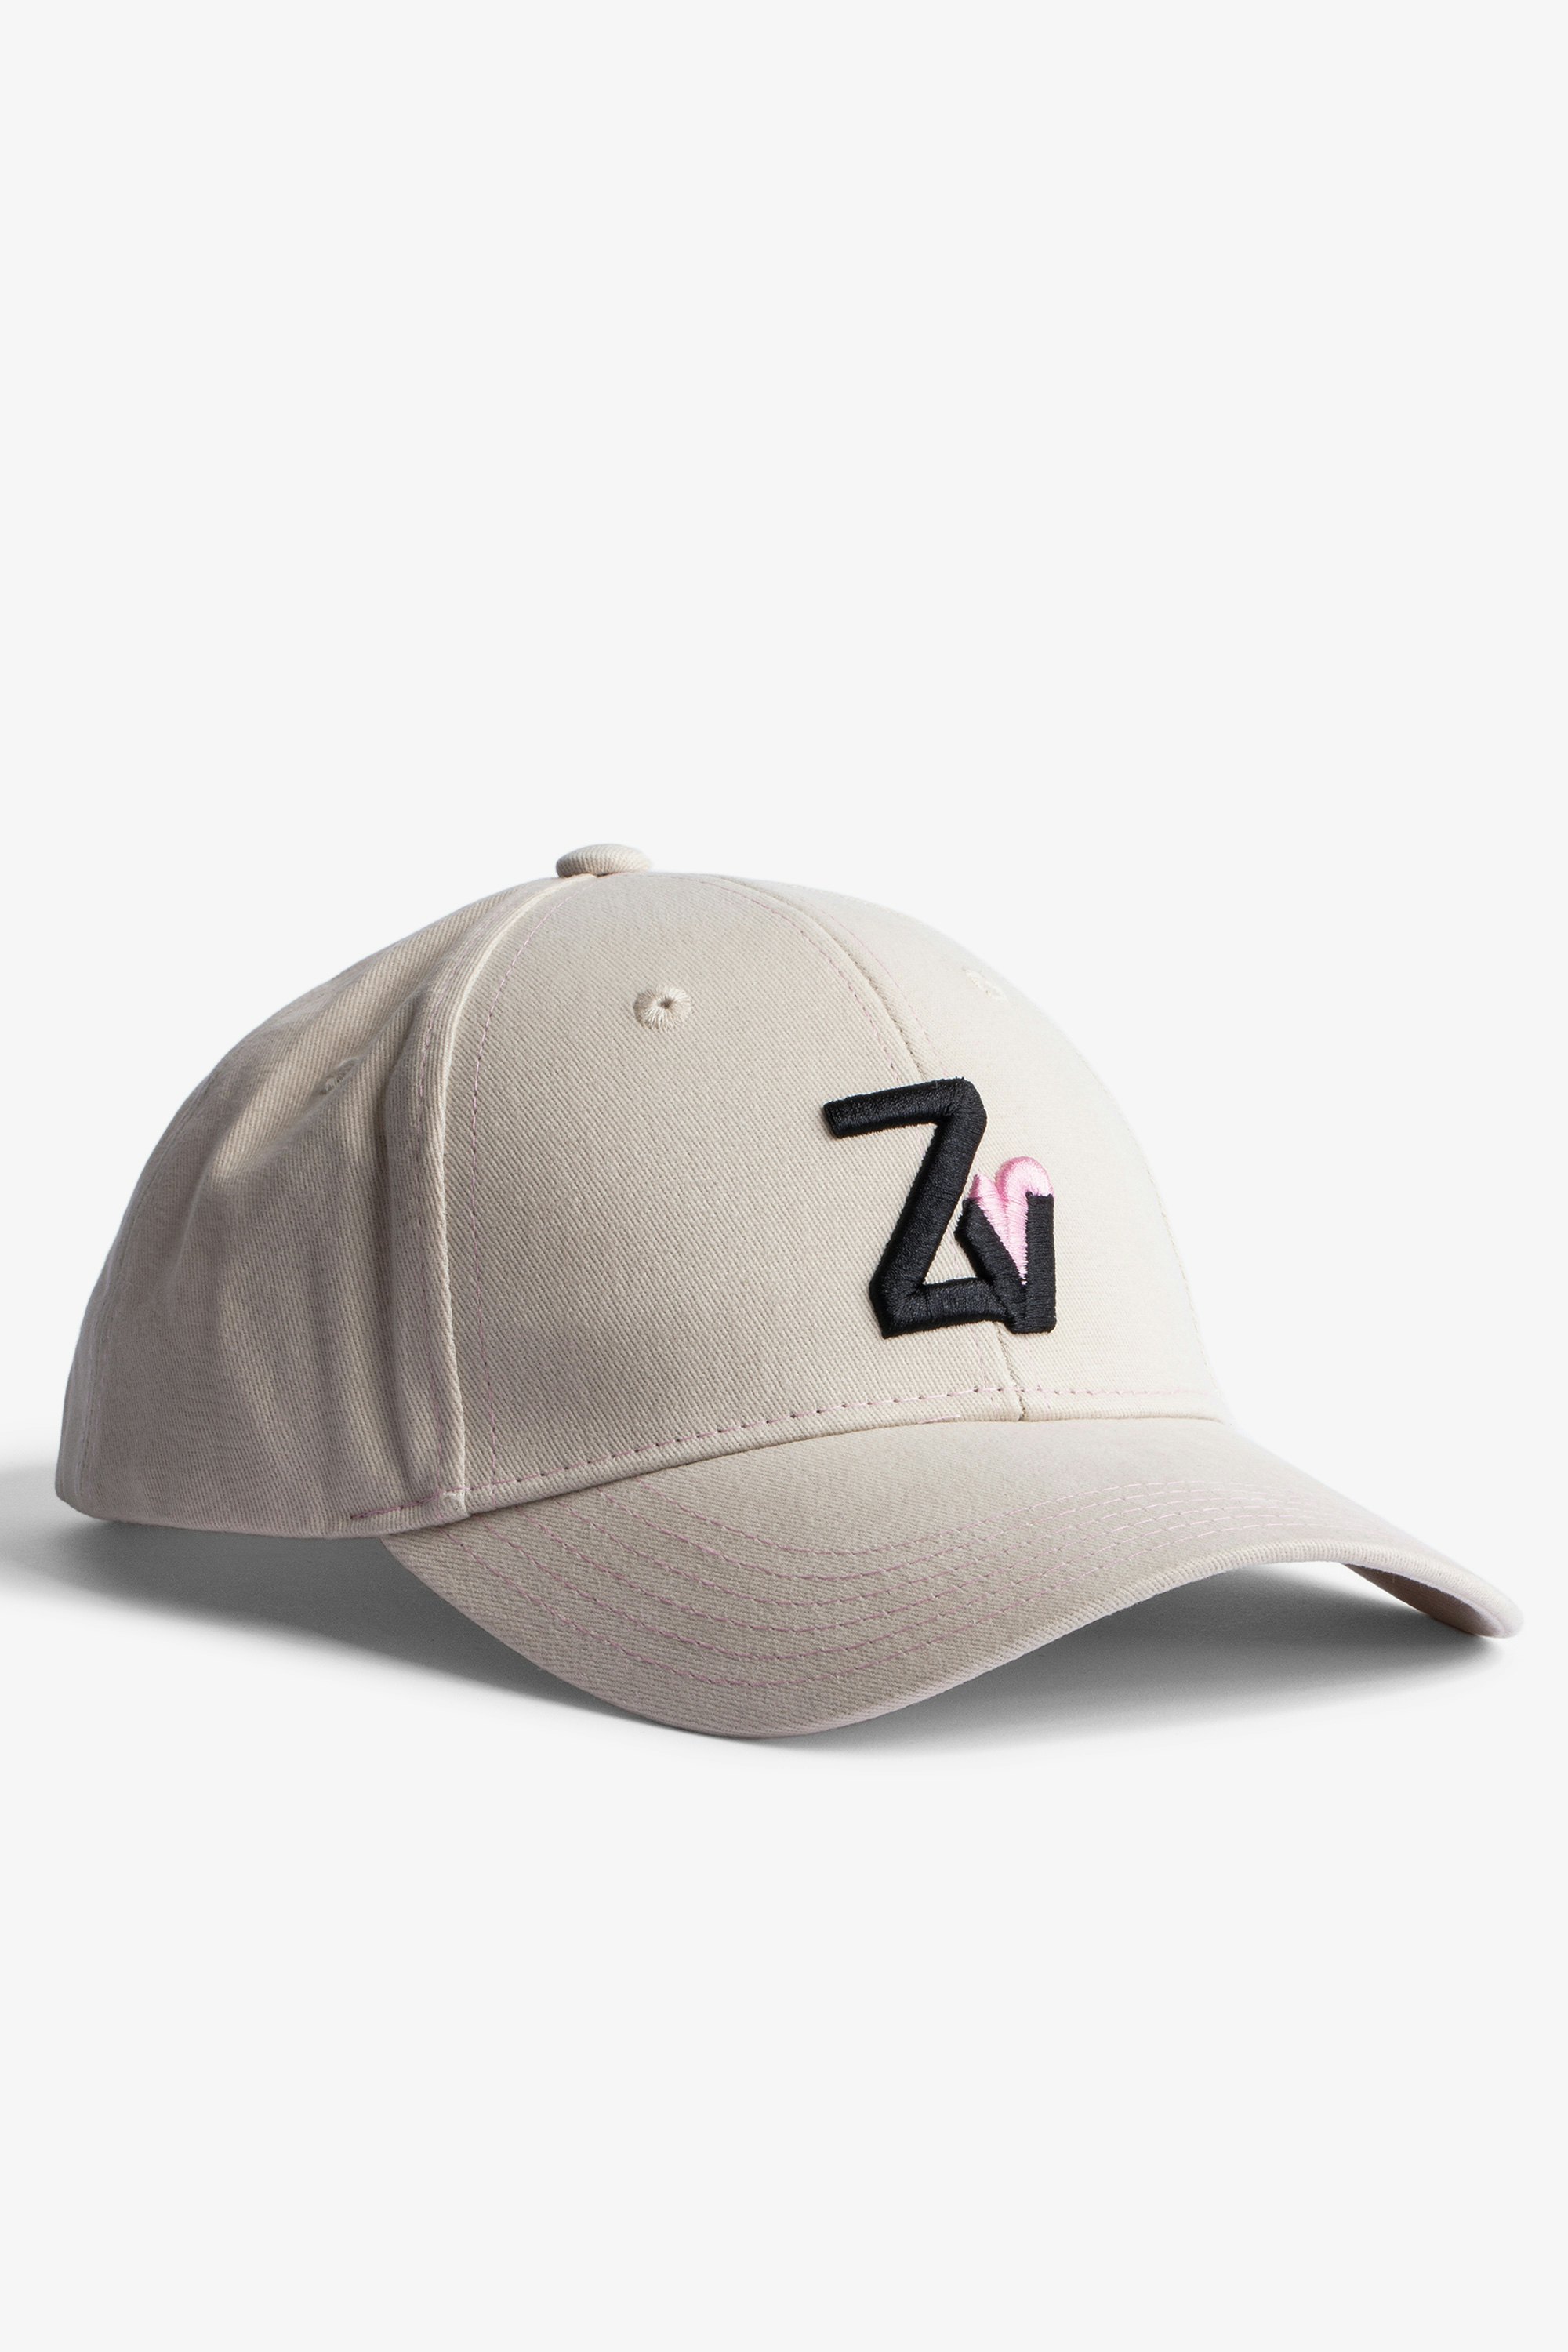 ZV Crush Klelia キャップ Women's cap with ZV embroidery in white